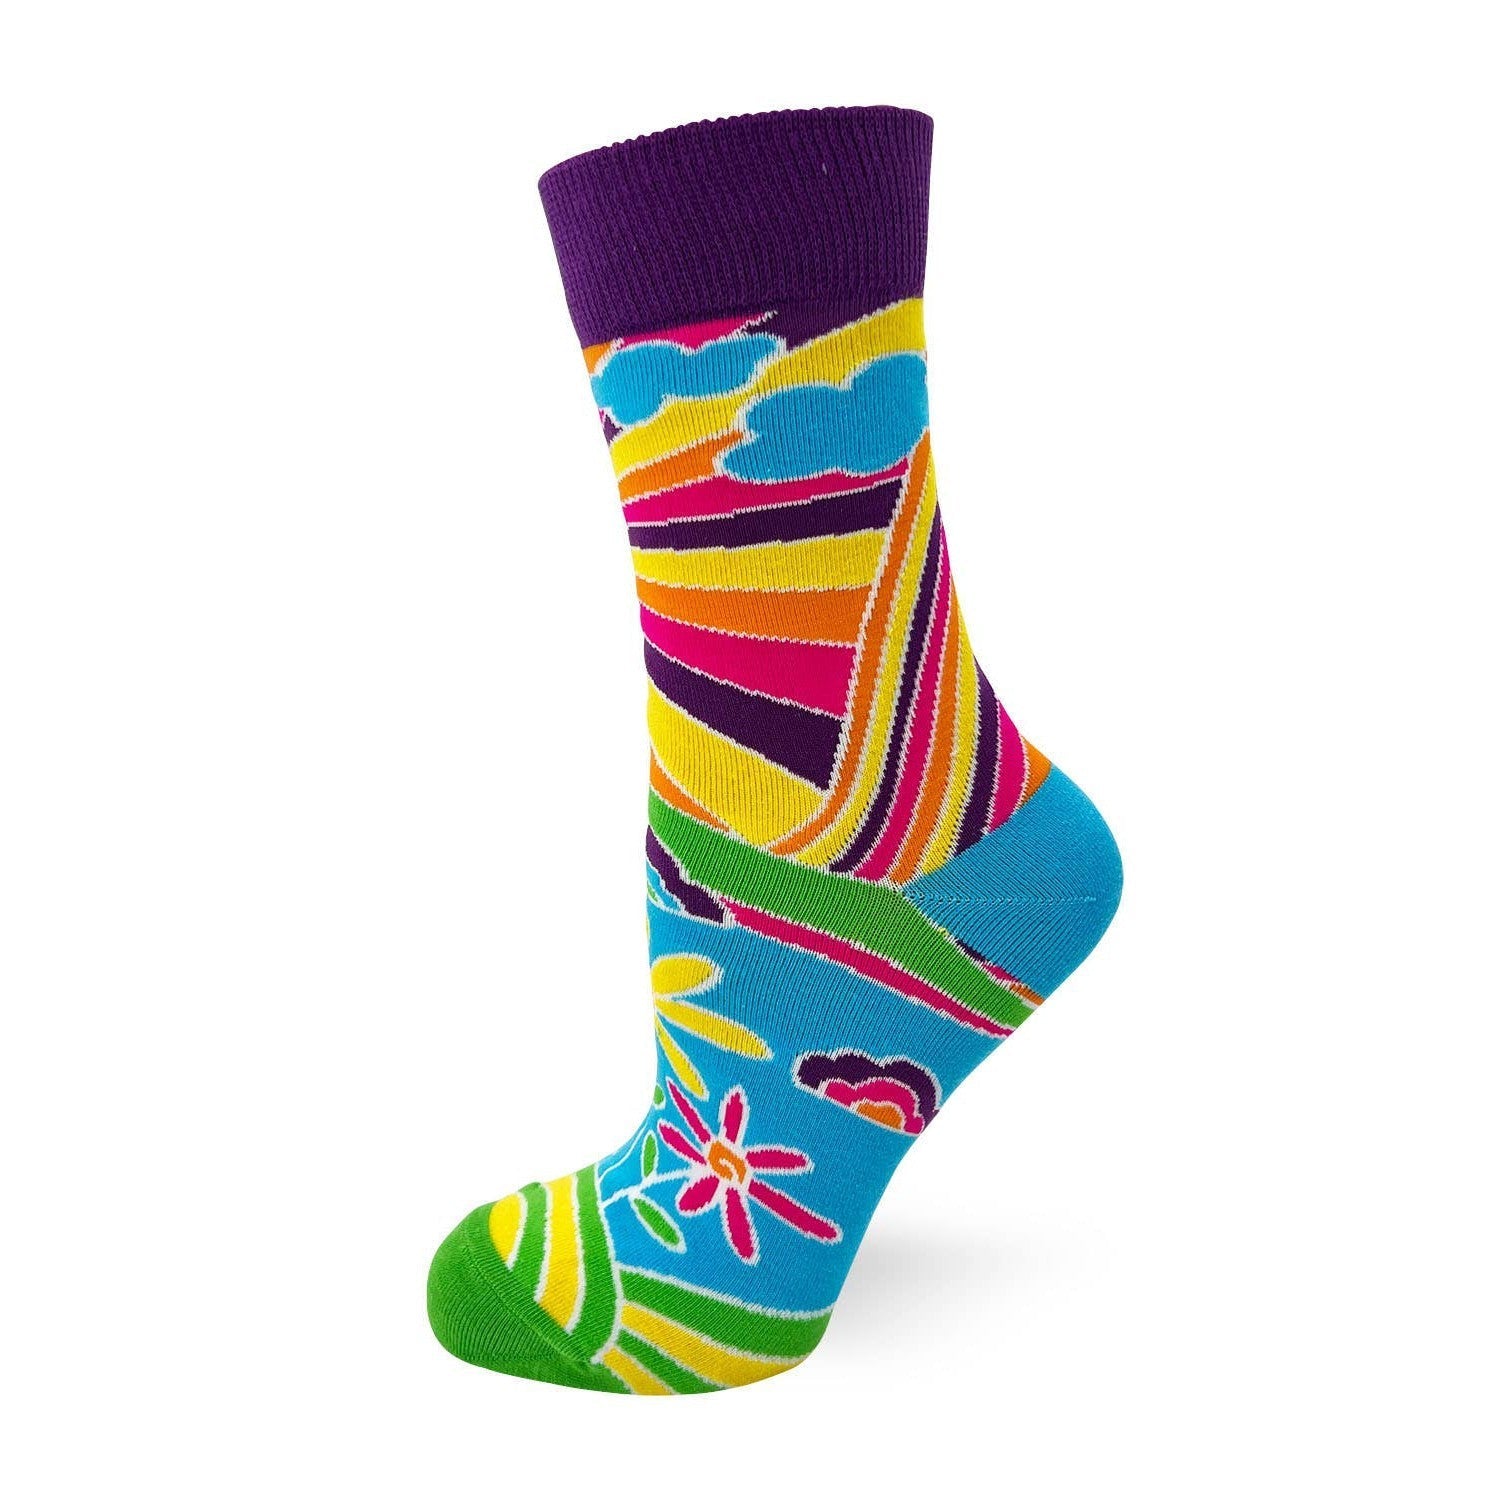 Go To Hell Ladies' Crew Socks in Groovy Rainbow | Women's Novelty Colorful Socks